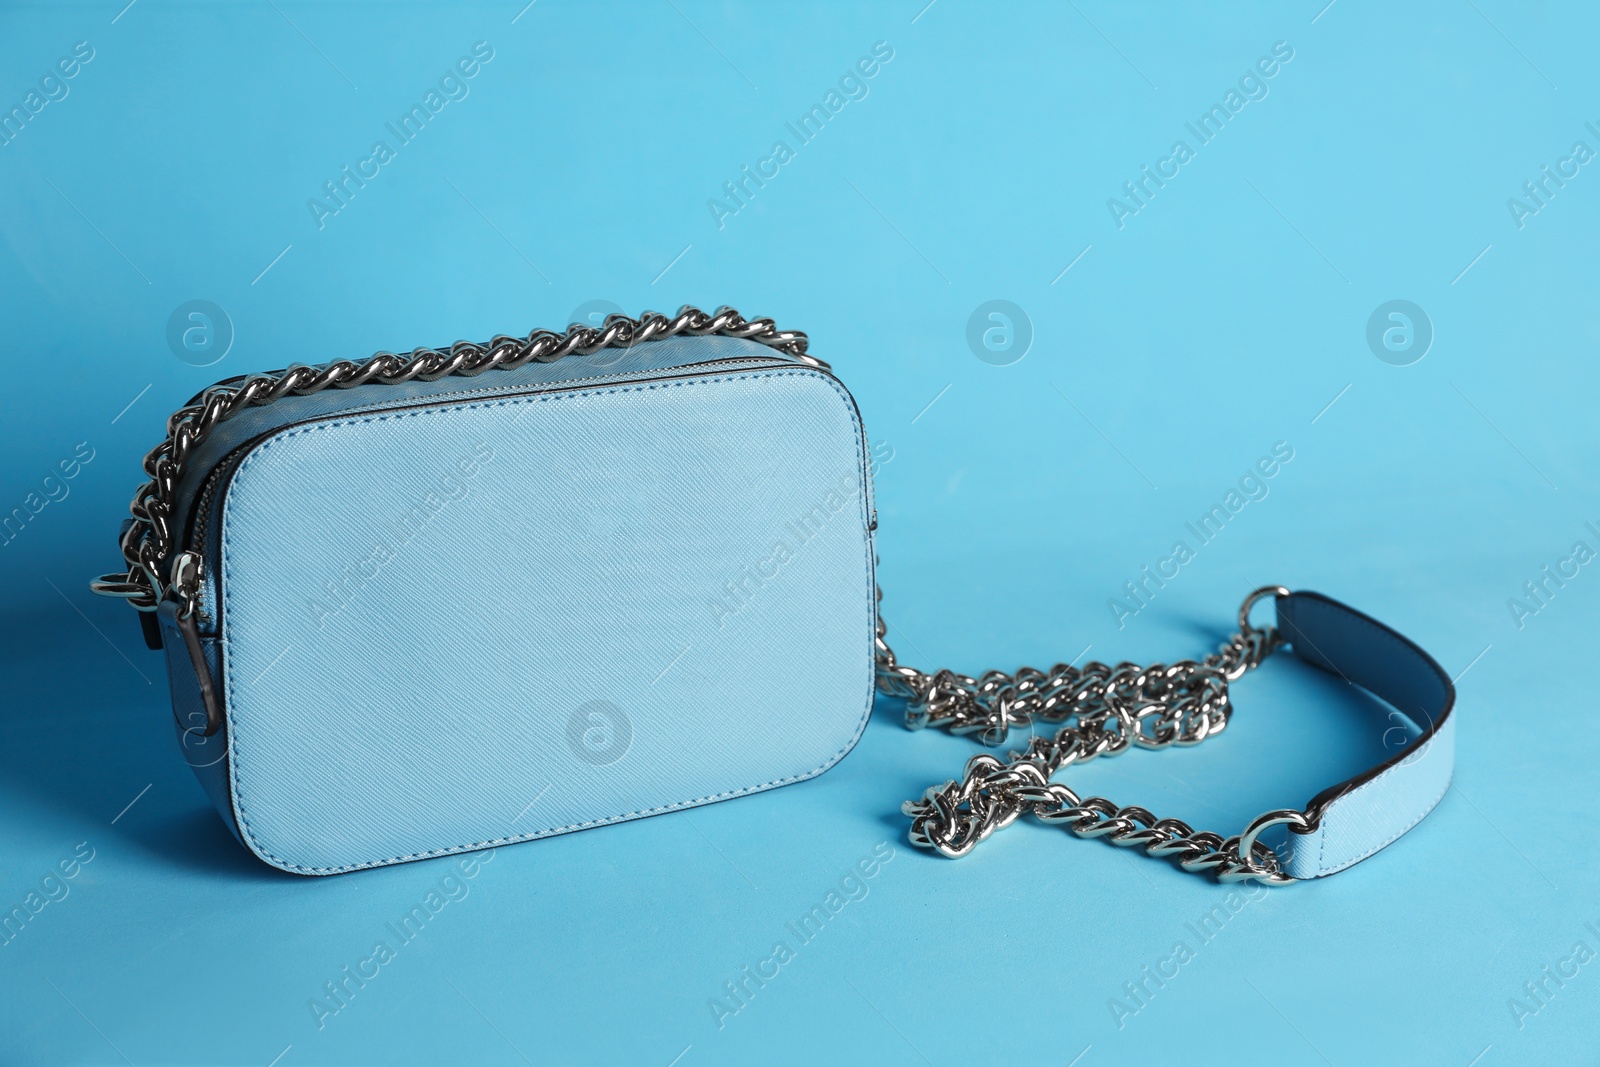 Photo of Stylish woman's bag on light blue background